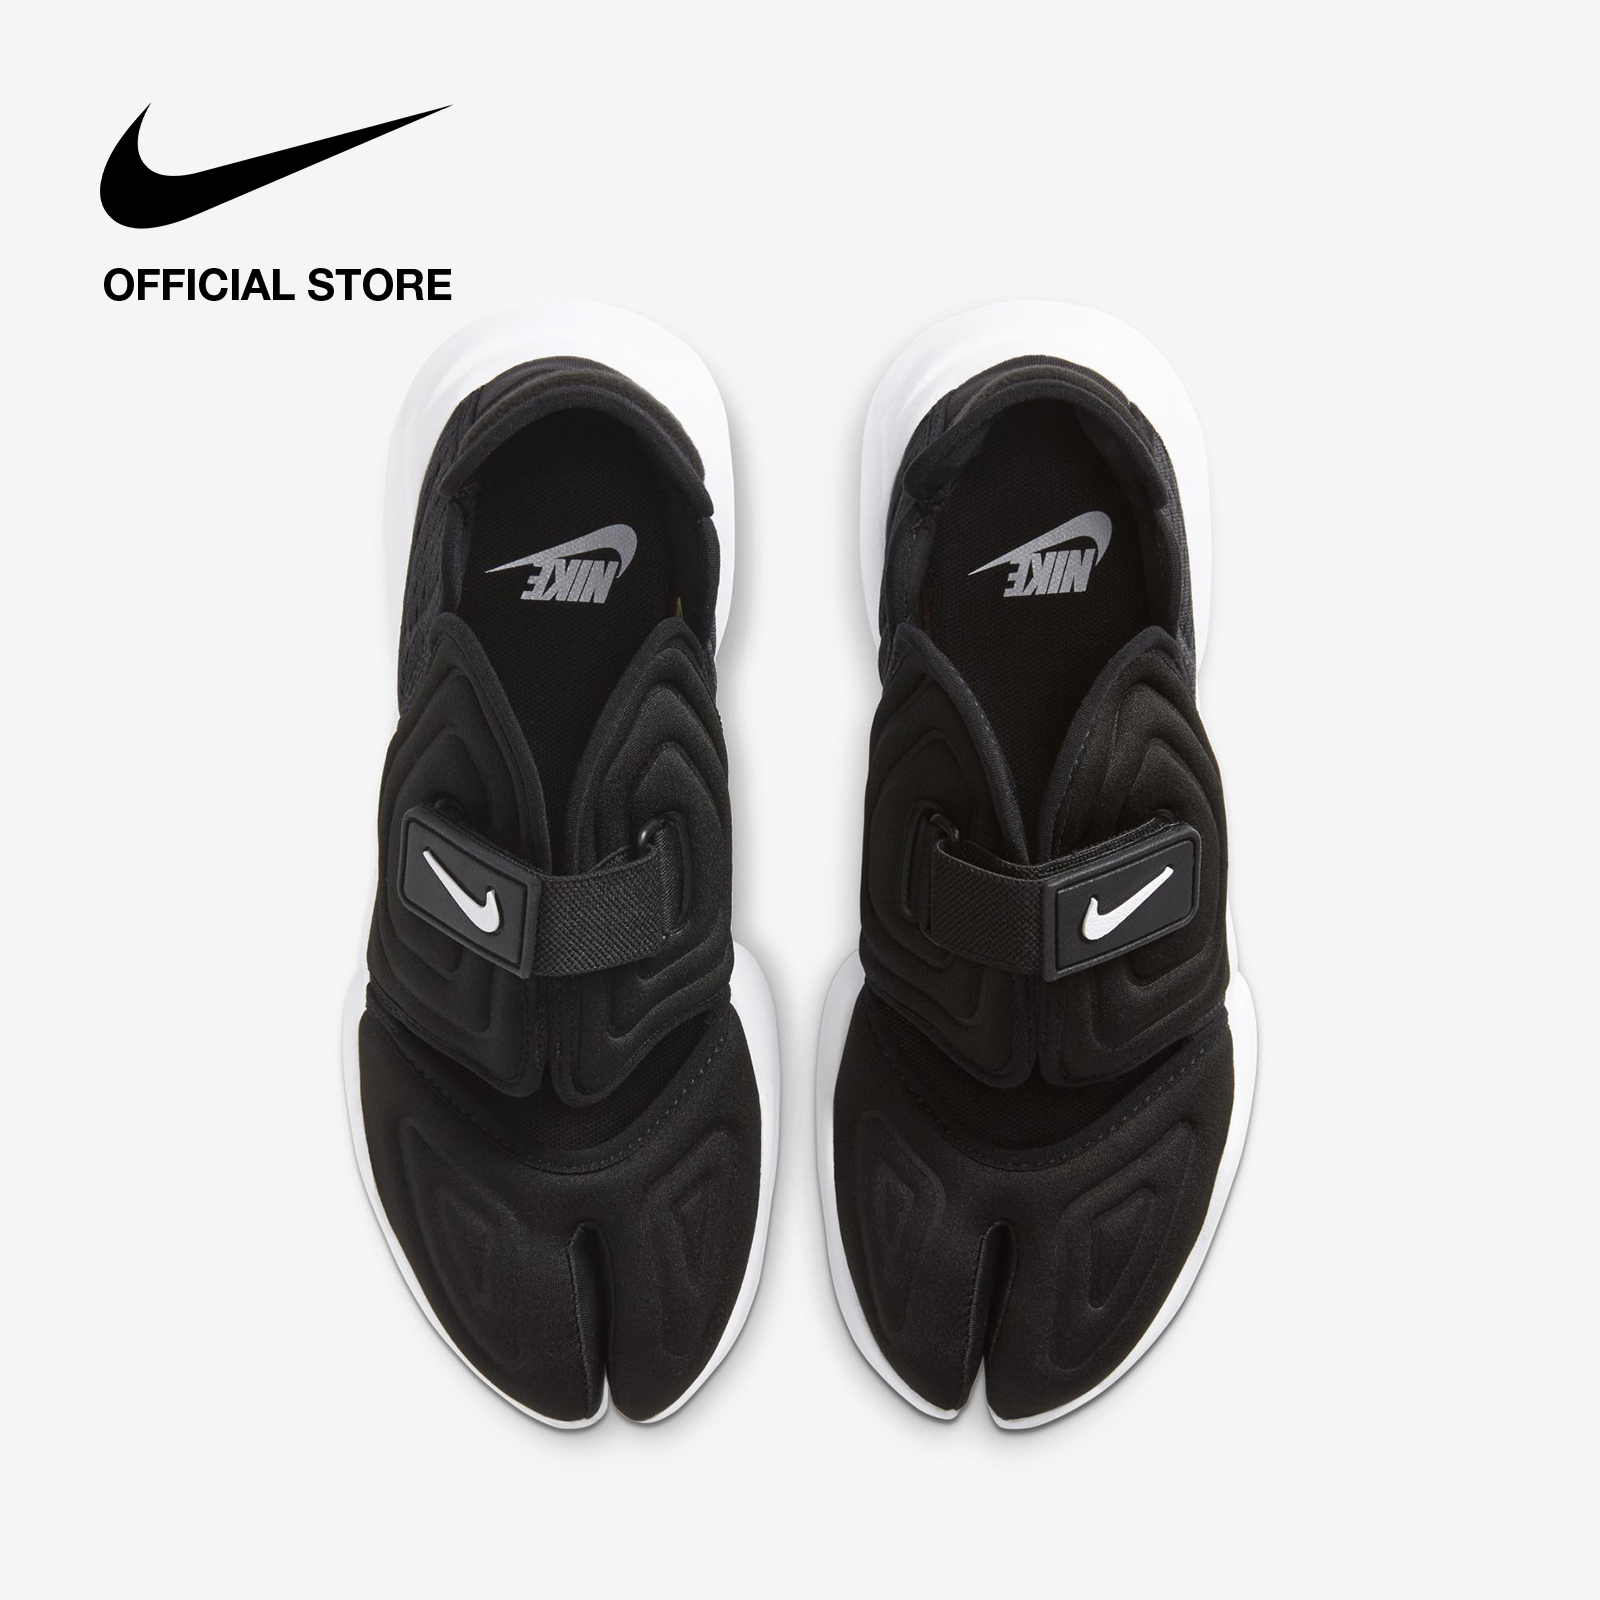 Nike Women's Aqua Rift Shoes - Black รองเท้าผู้หญิง Nike Aqua Rift - สีดำ